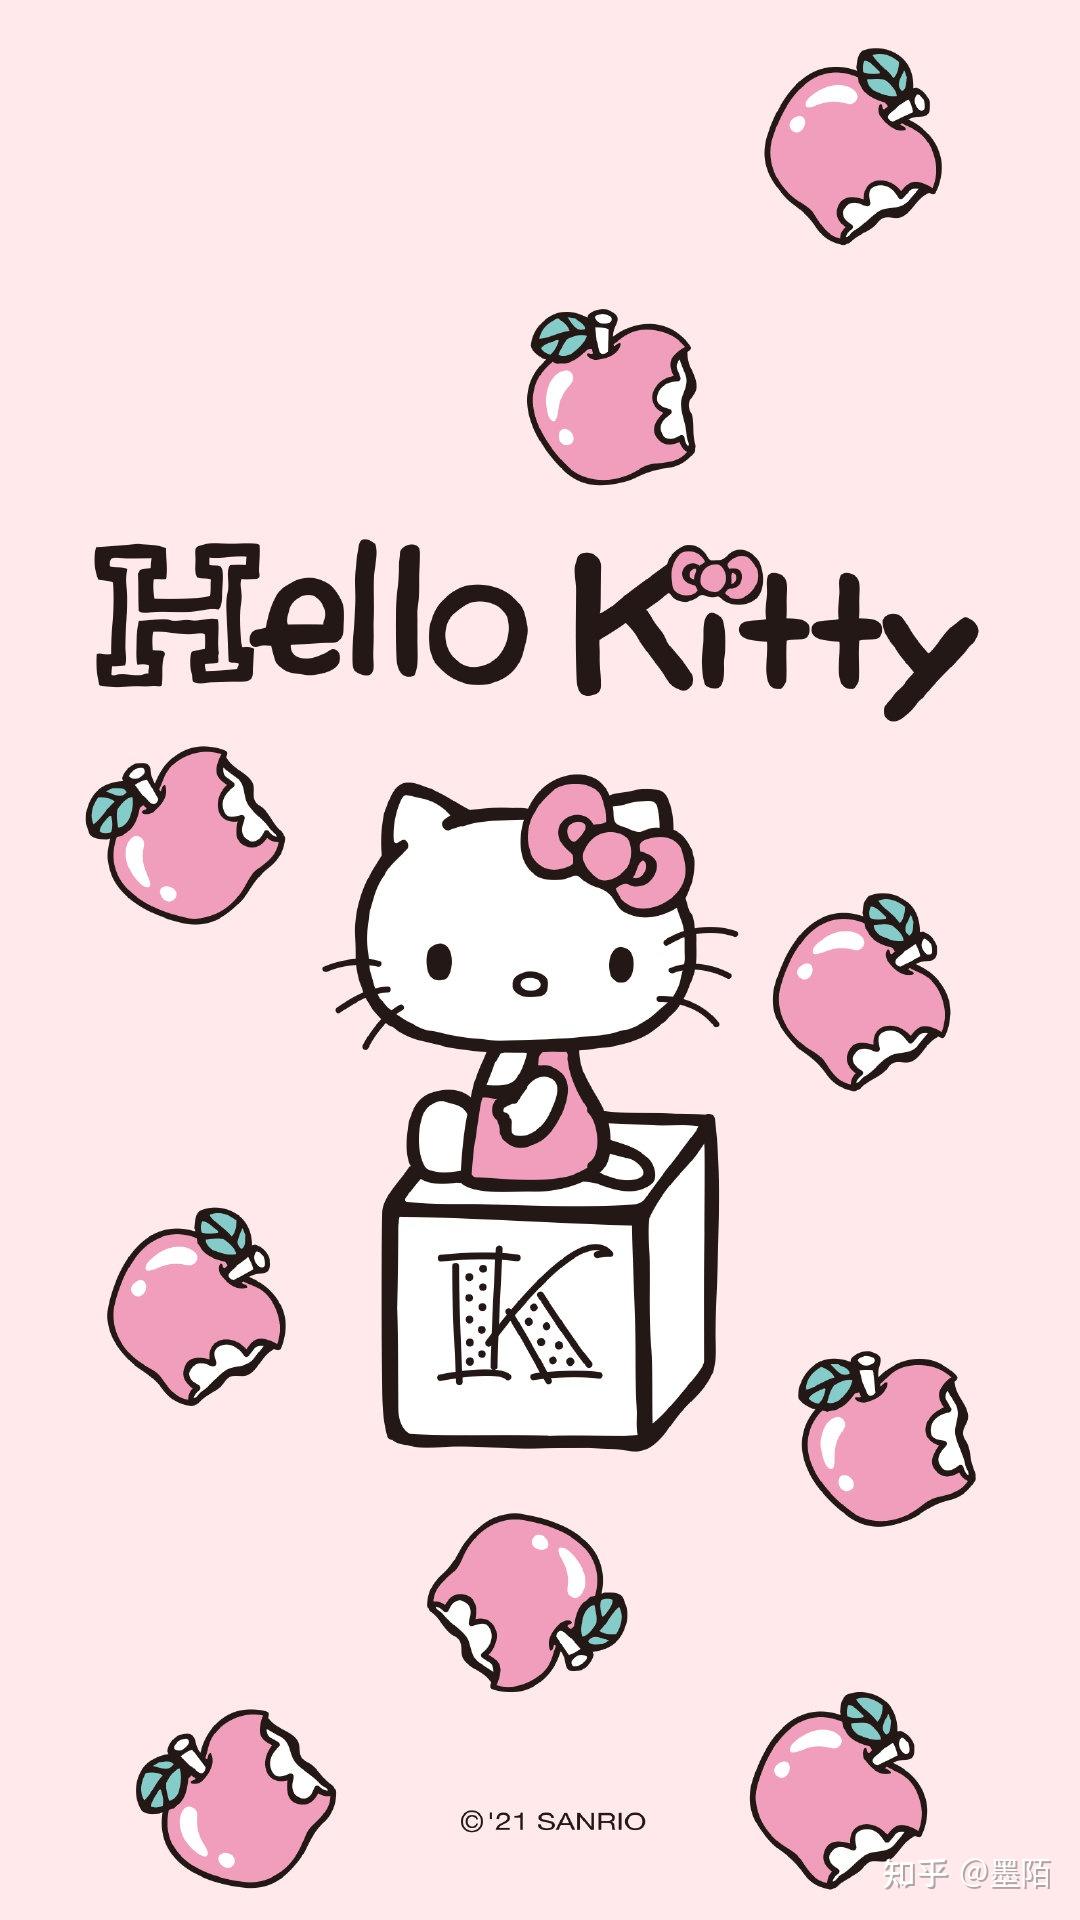 KT猫设计图__动漫人物_动漫动画_设计图库_昵图网nipic.com